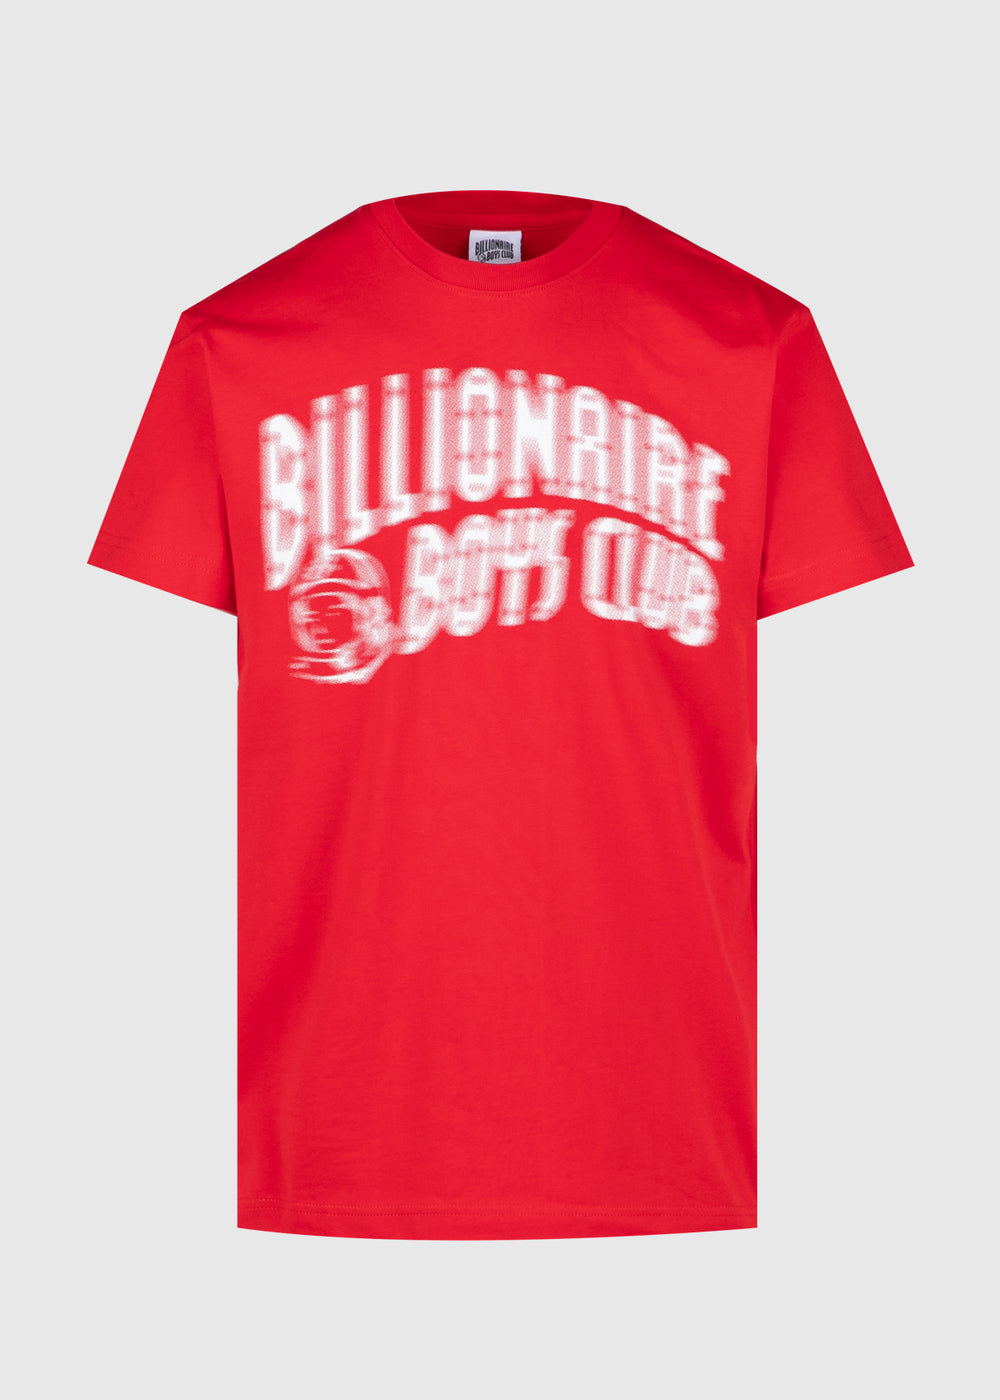 billionaire boys club red shirt